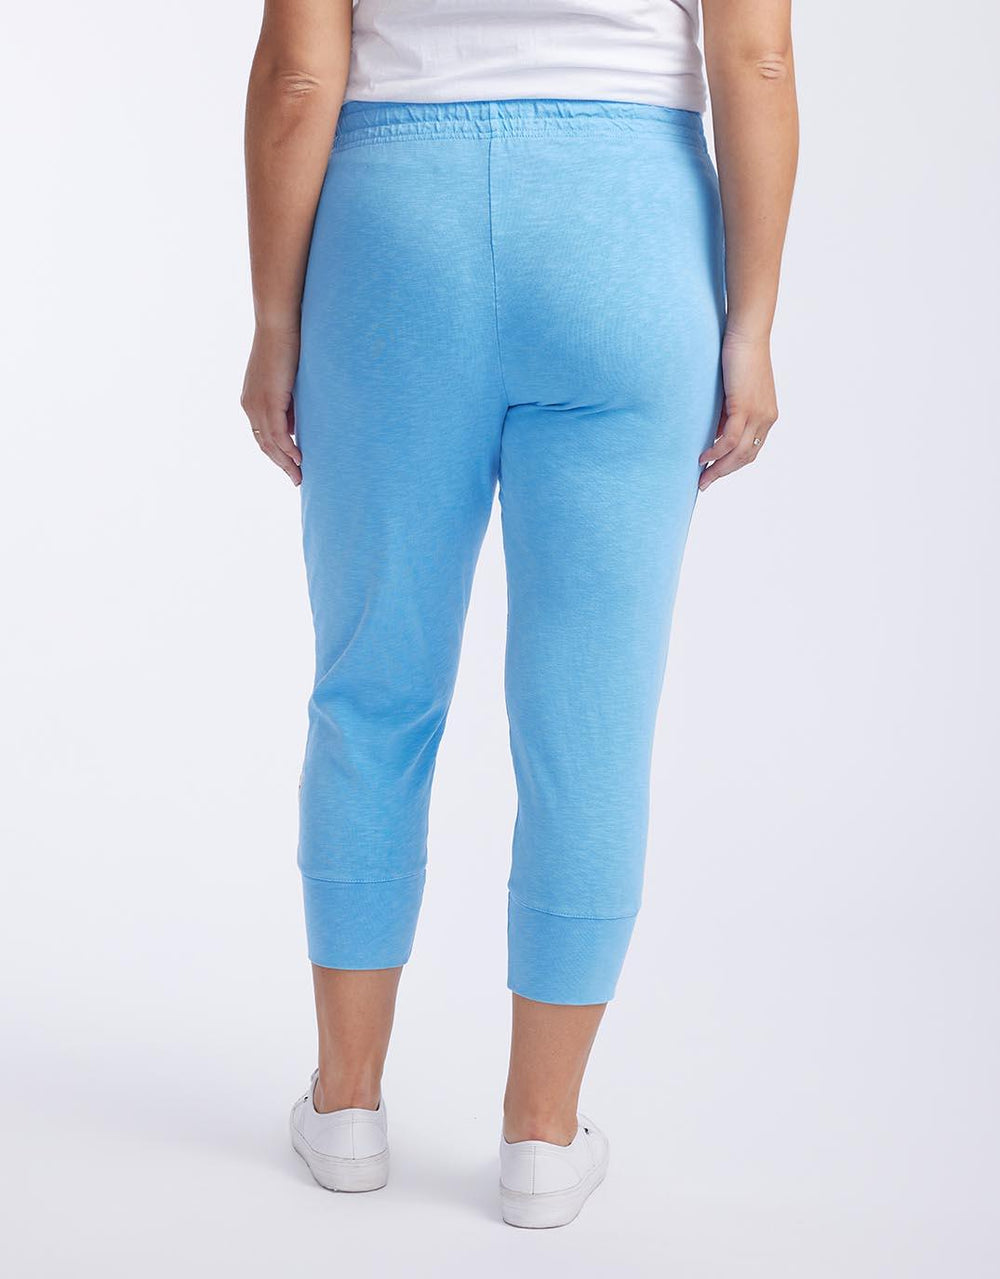 Elm - 3/4 Brunch Pants - Azure Blue - White & Co Living Pants